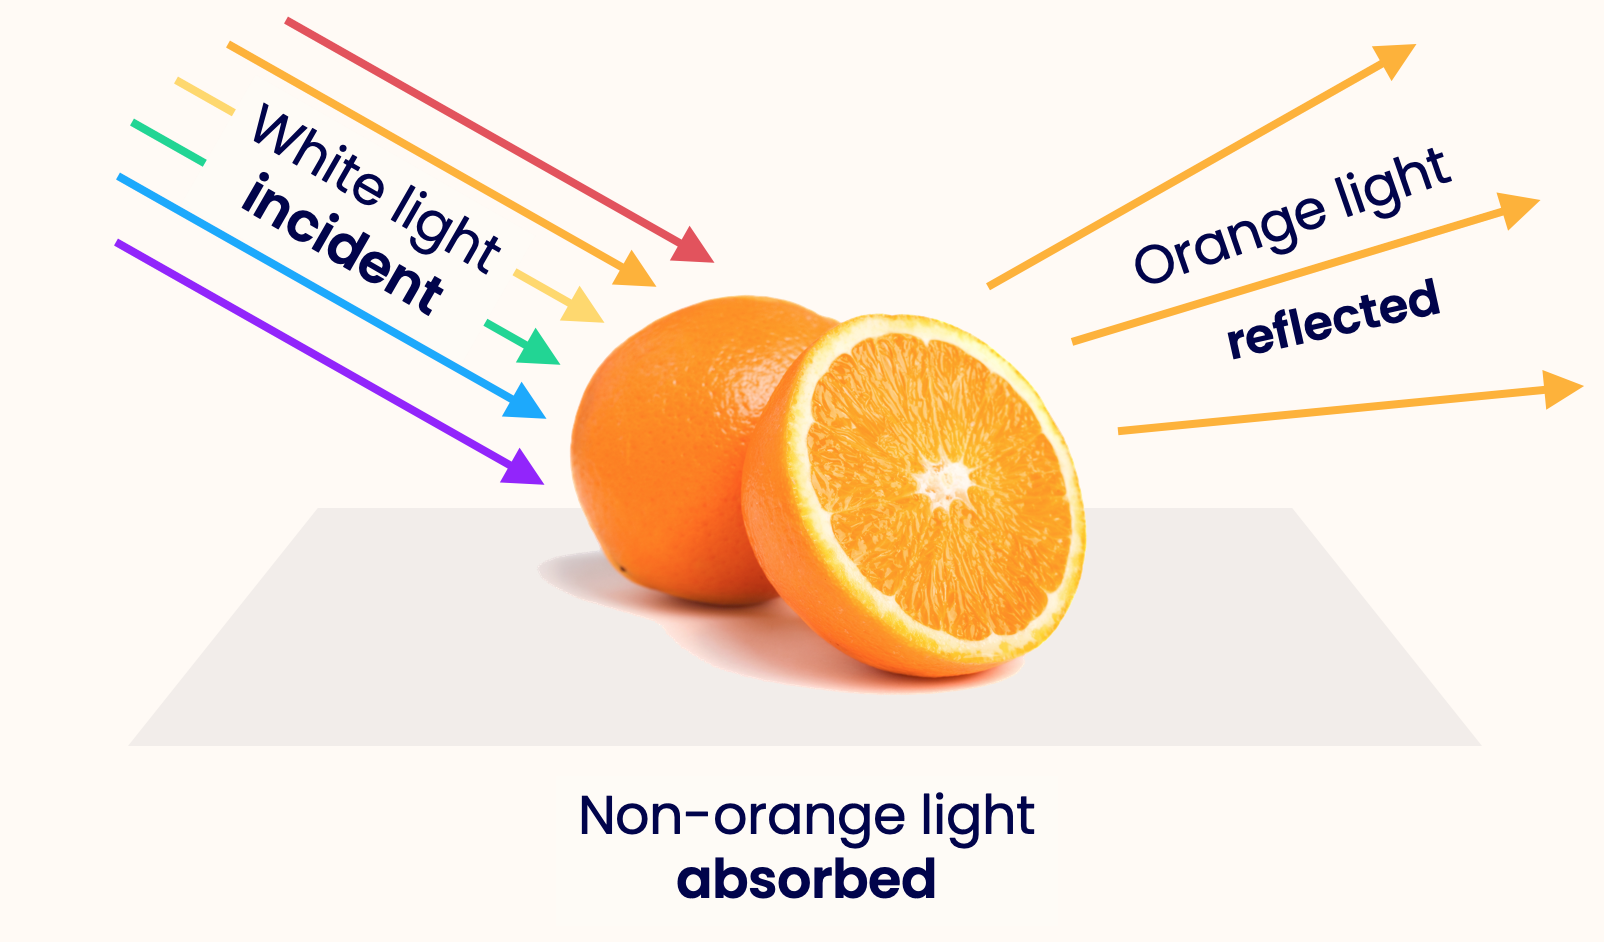 An orange (fruit) reflecting orange light